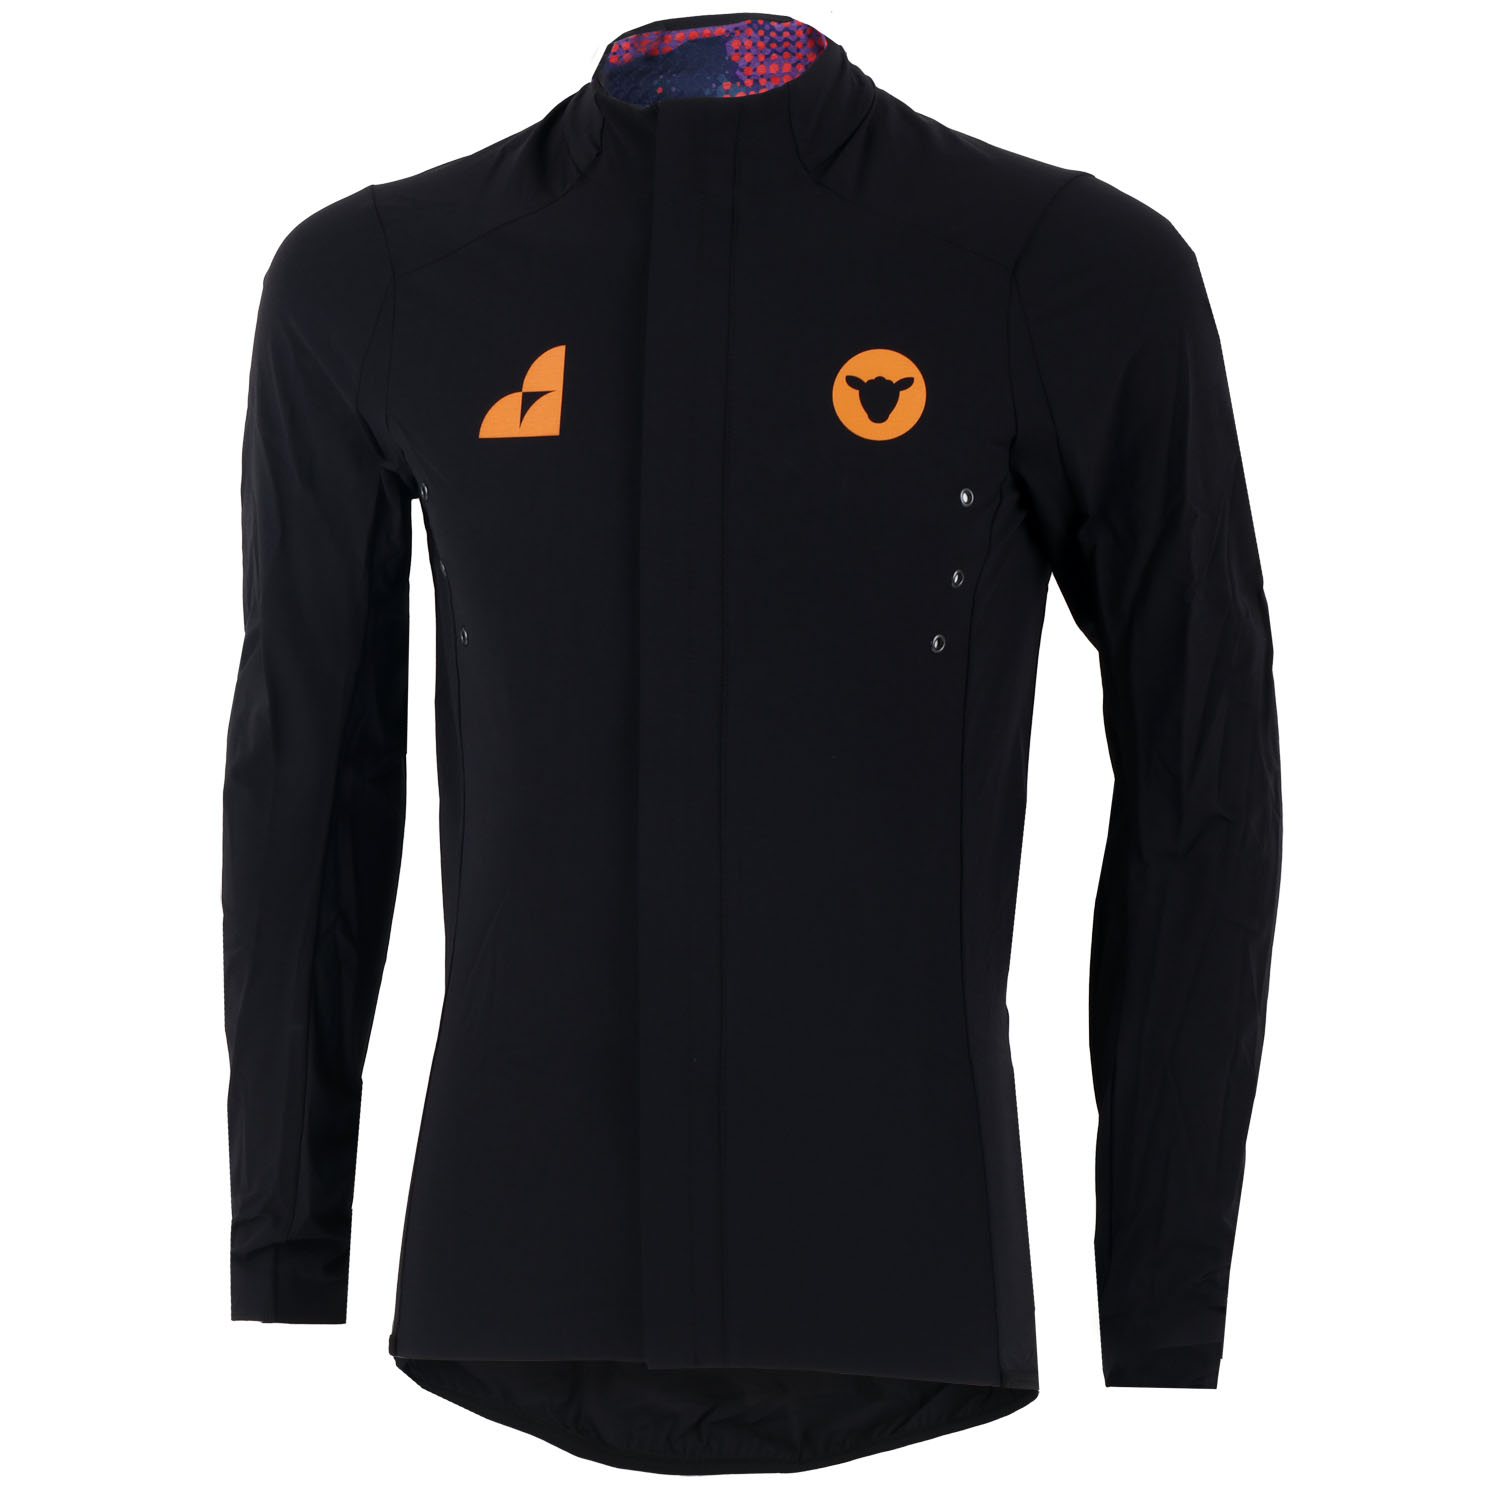 Productfoto van Black Sheep Cycling LTD Queens Micro Jacket - Spain